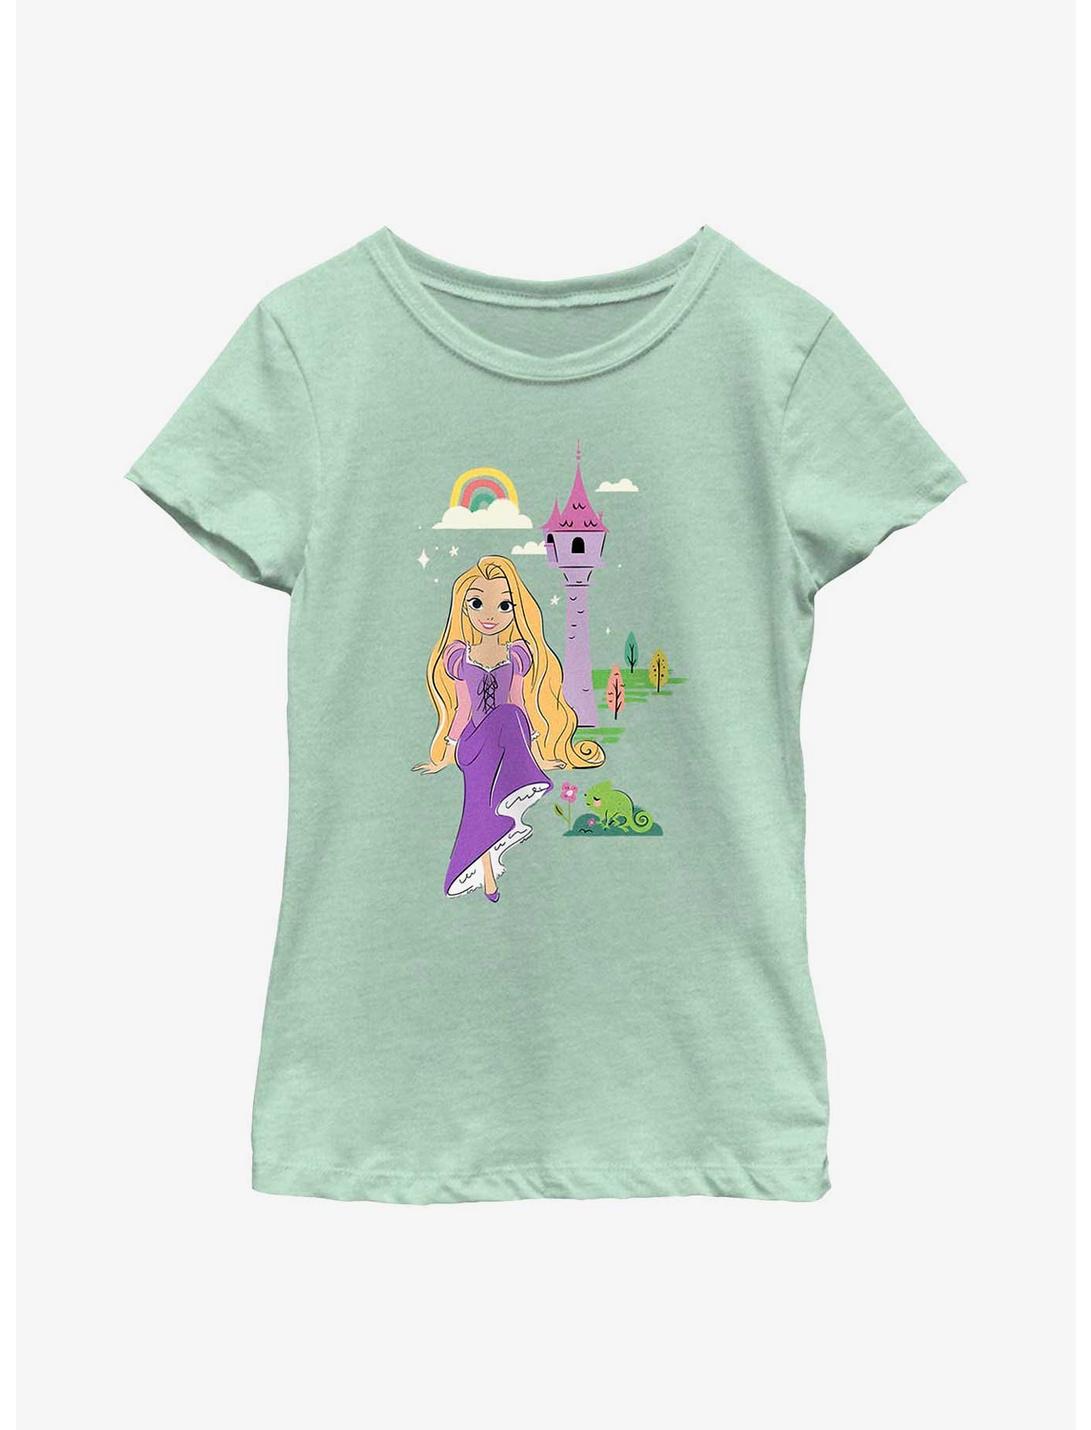 Disney Tangled Rapunzel Group Cartoon Youth Girls T-Shirt, MINT, hi-res